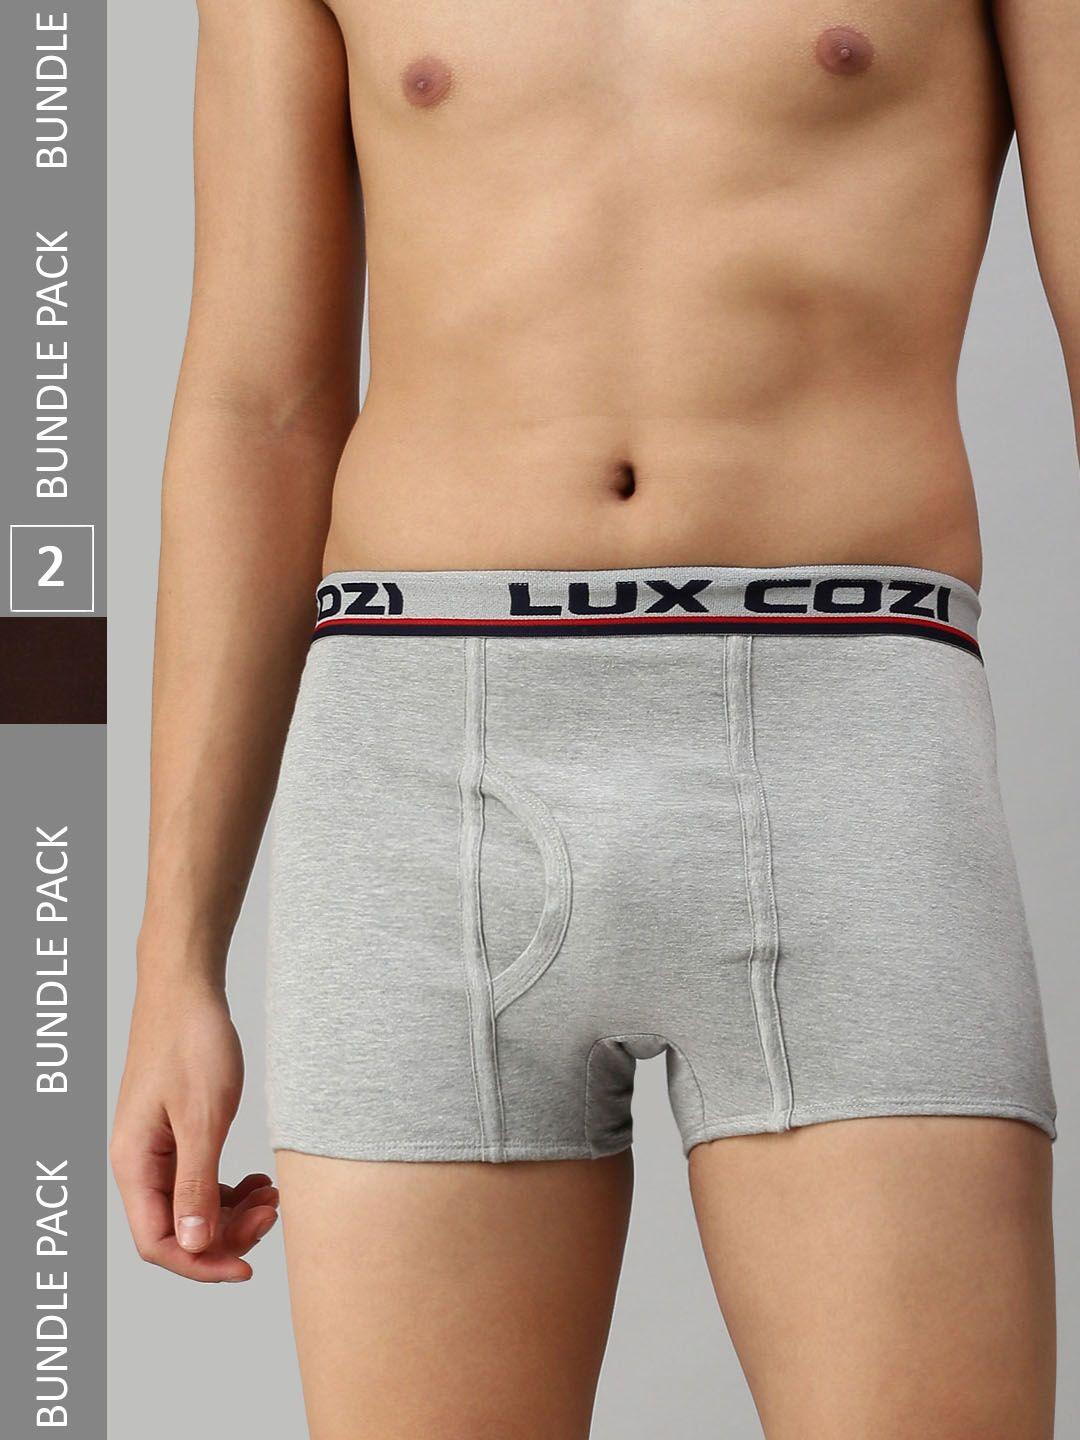 lux cozi men pack of 2 brand logo printed pure cotton trunks cozi_bigshot_slp_brn_gm_2pc